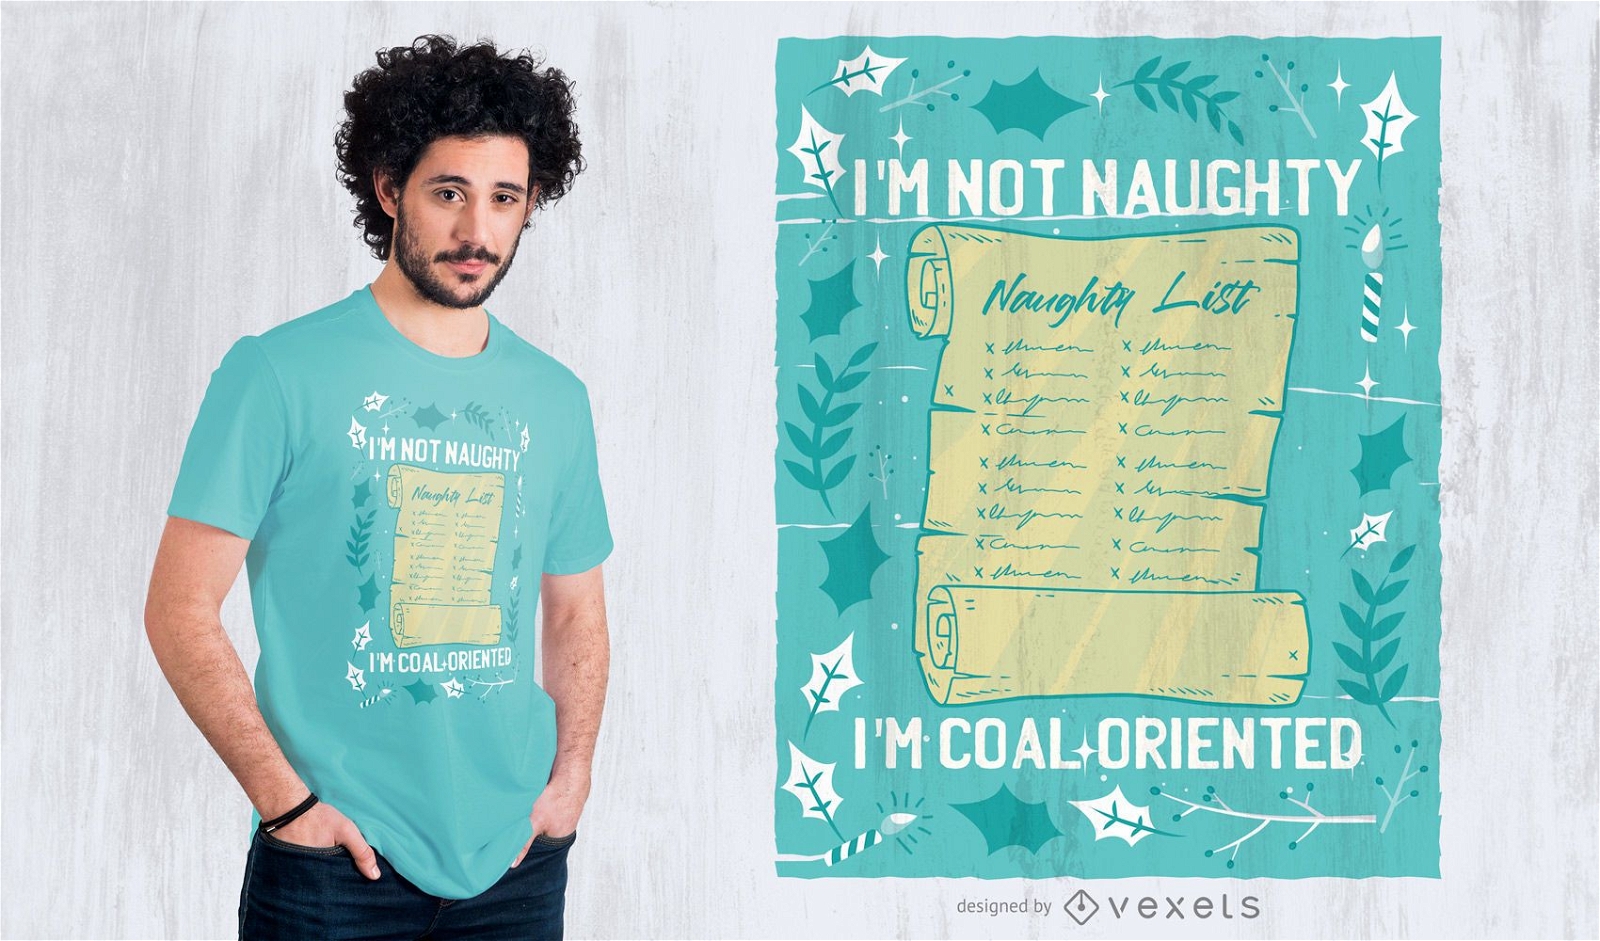 Naughty list t-shirt design